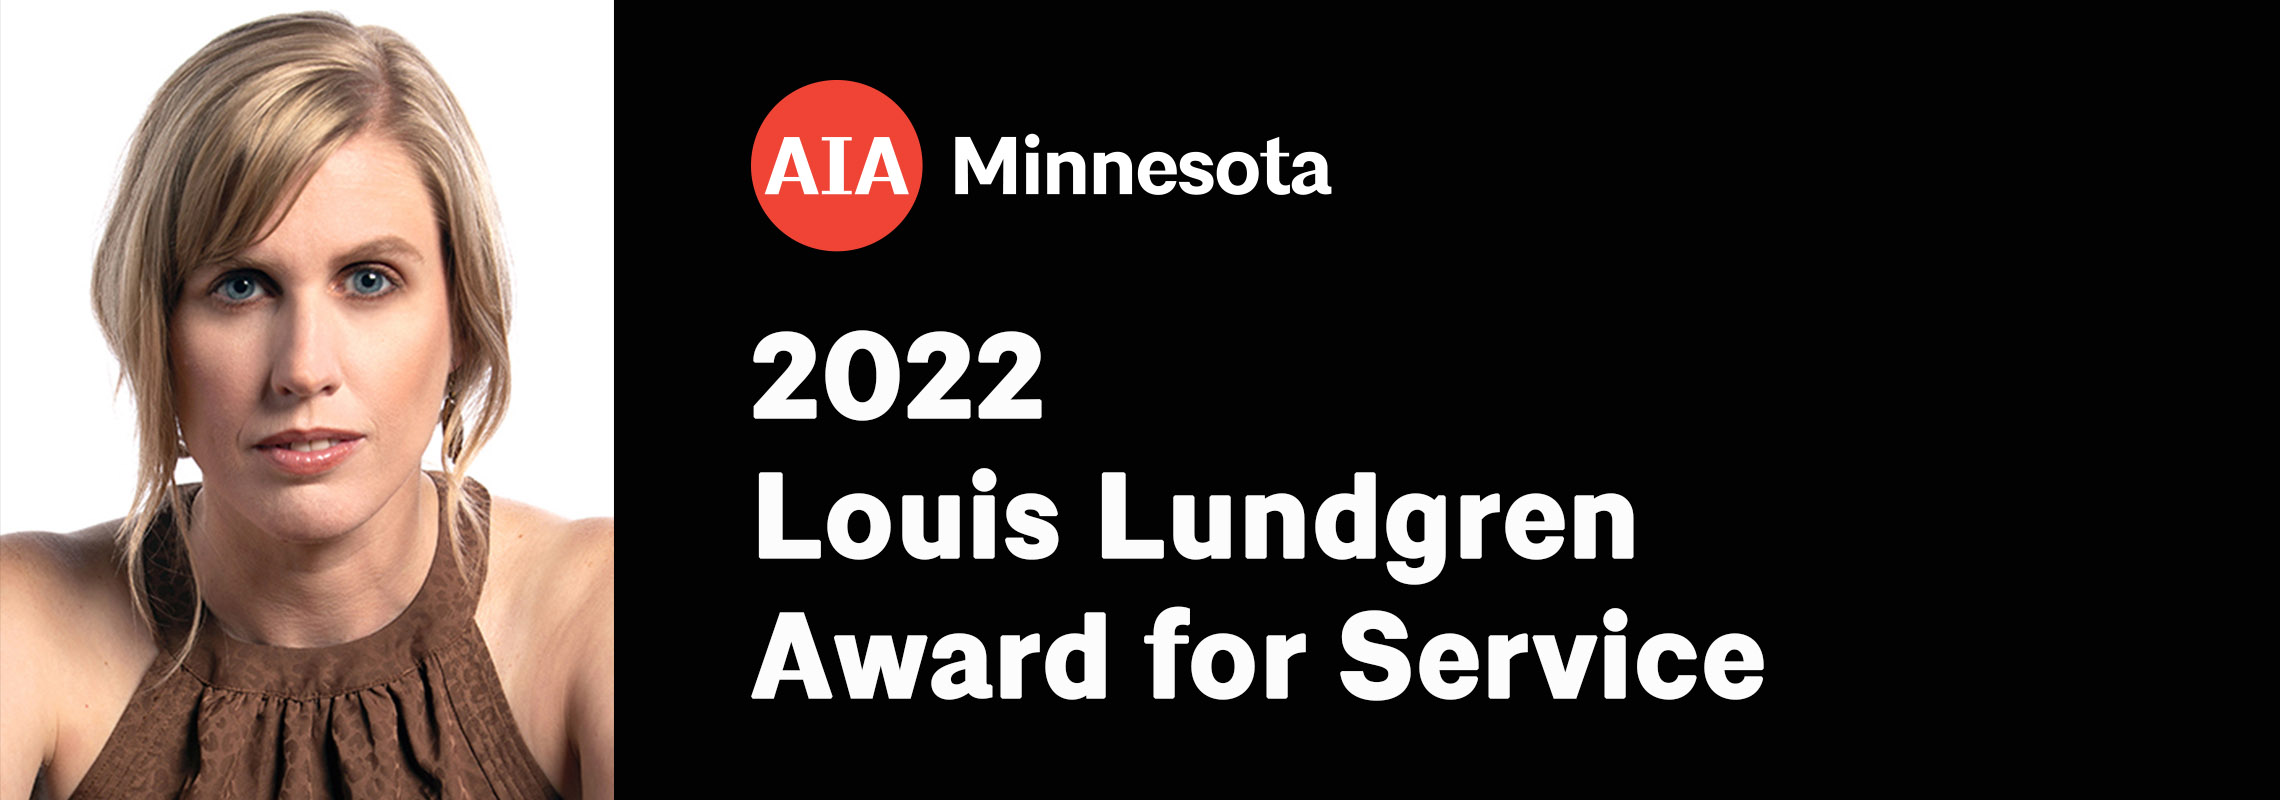 Louis Lundgren Award for Service